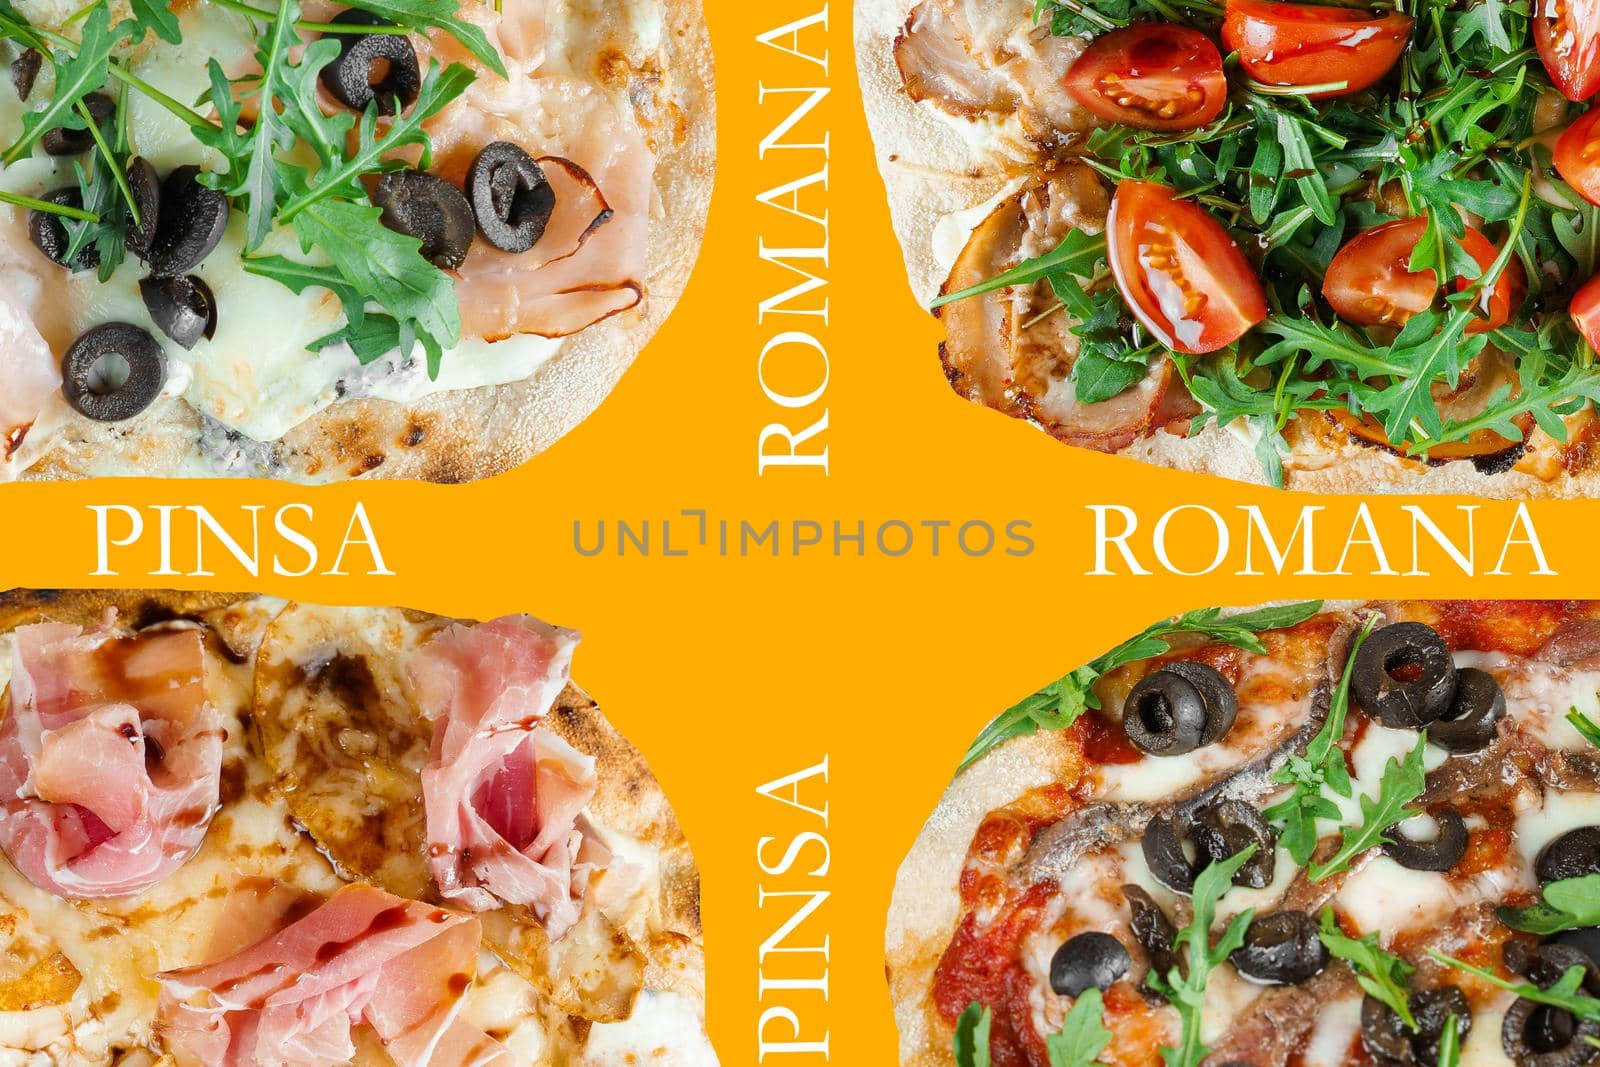 Pinsa romana gourmet italian cuisine on yellow background. Scrocchiarella. Food delivery from pizzeria. by Rabizo